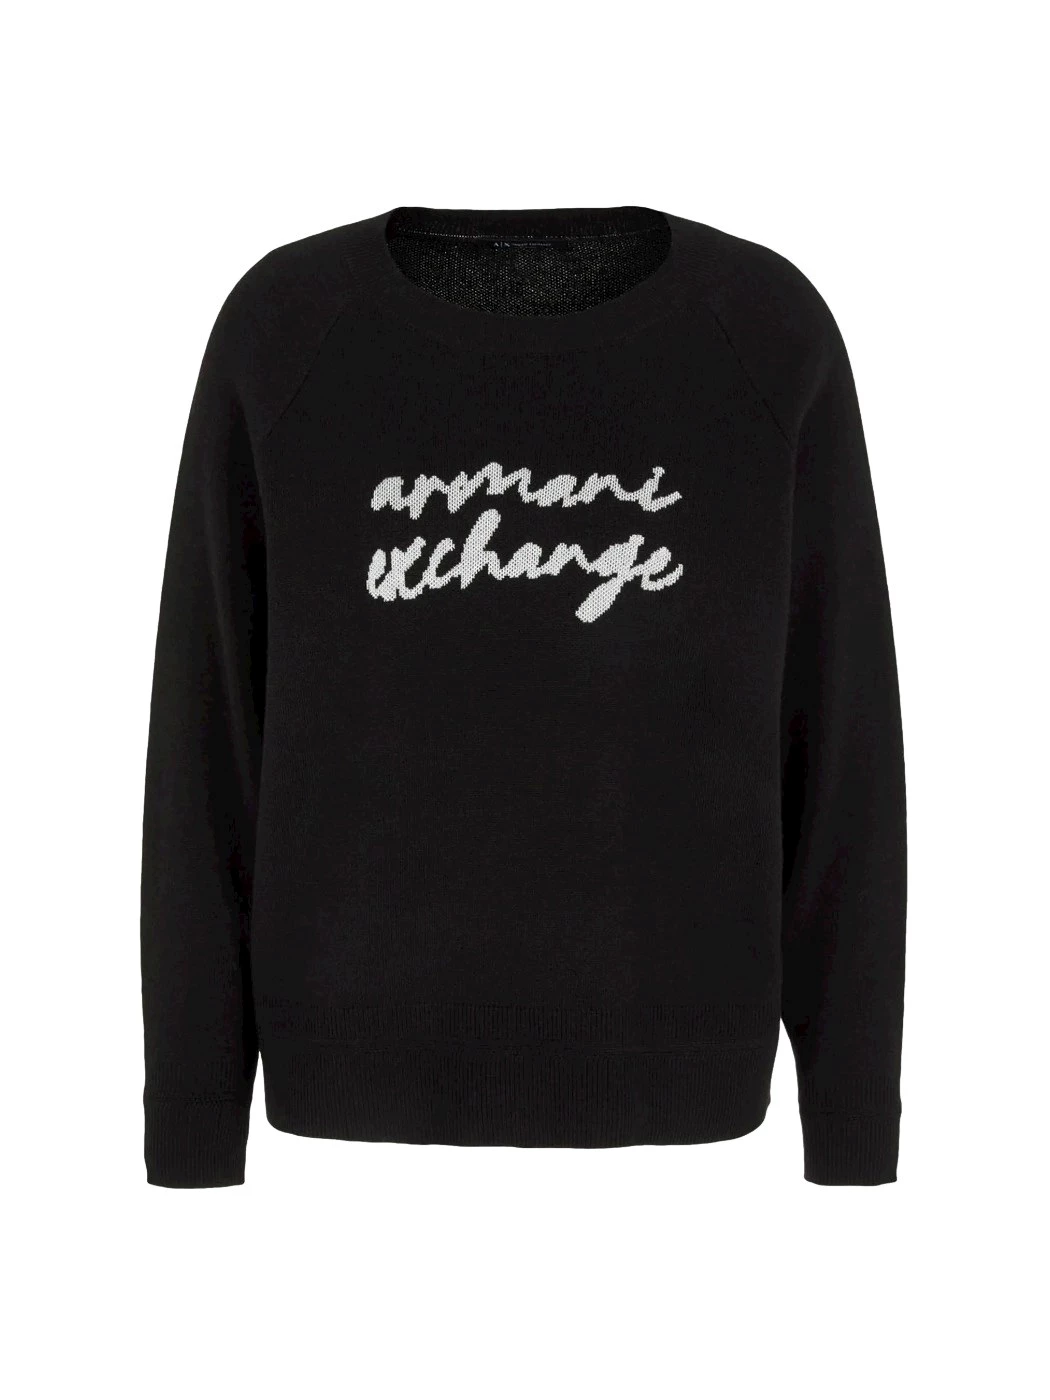 Armani Exchange embroidered logo sweater